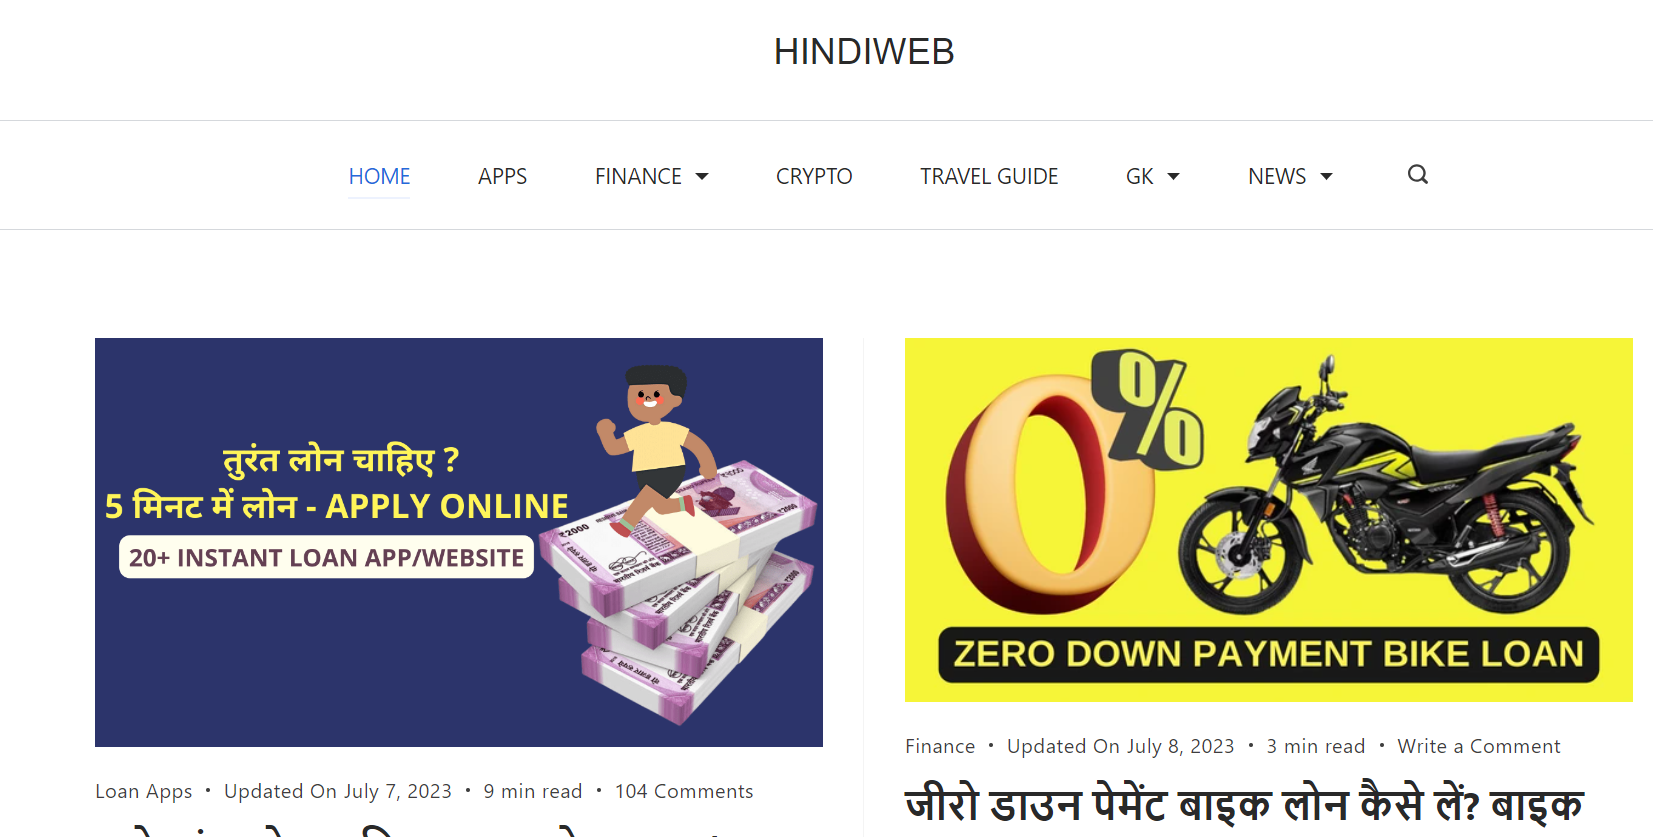 Hindiweb